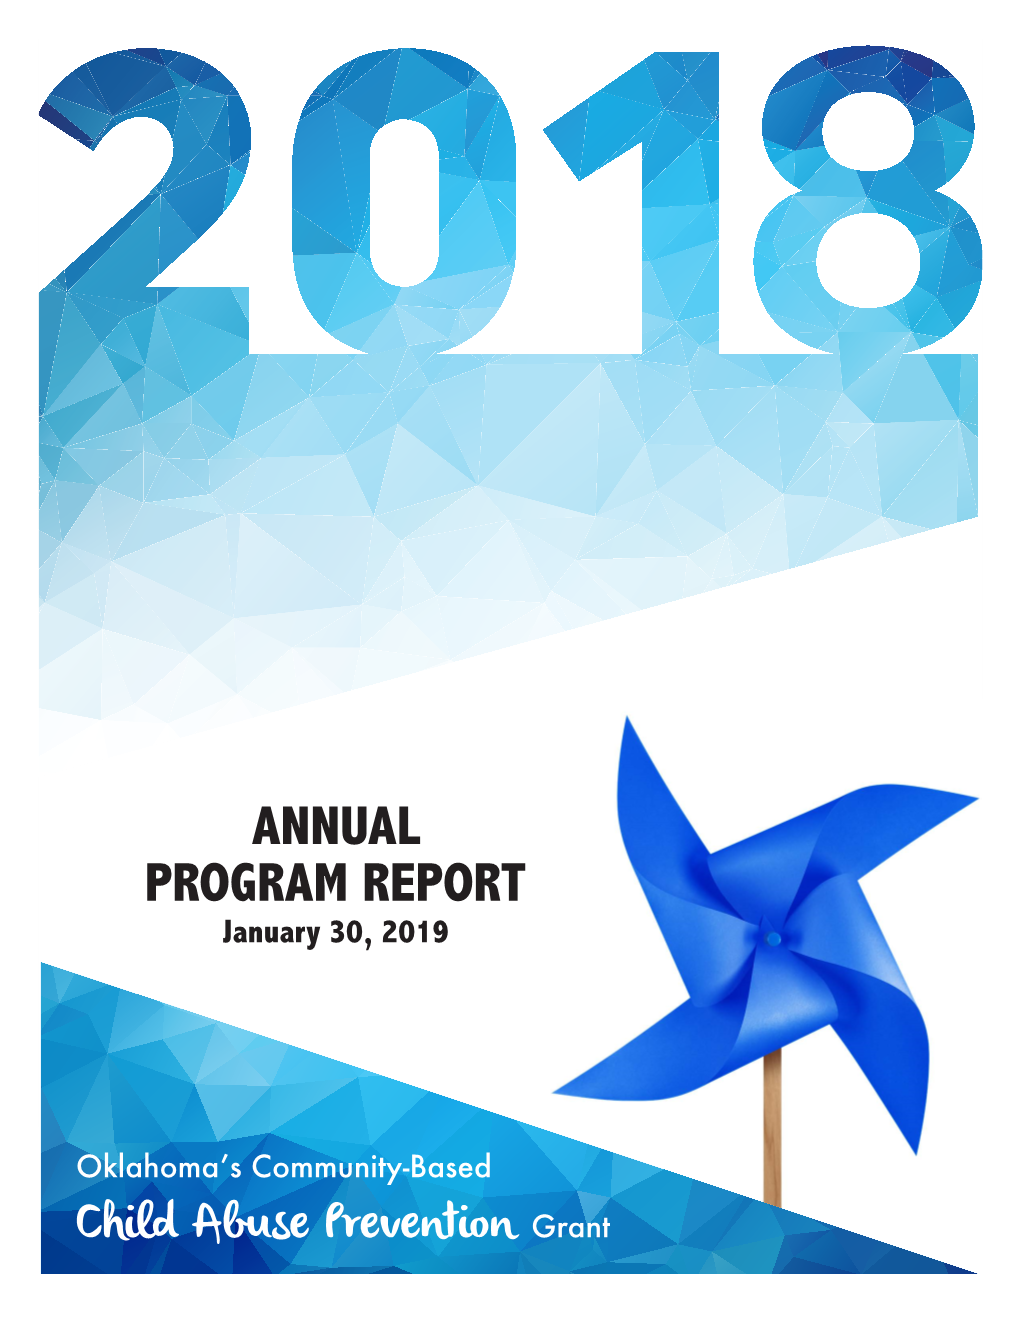 ANNUAL PROGRAM REPORT January 30, 2019